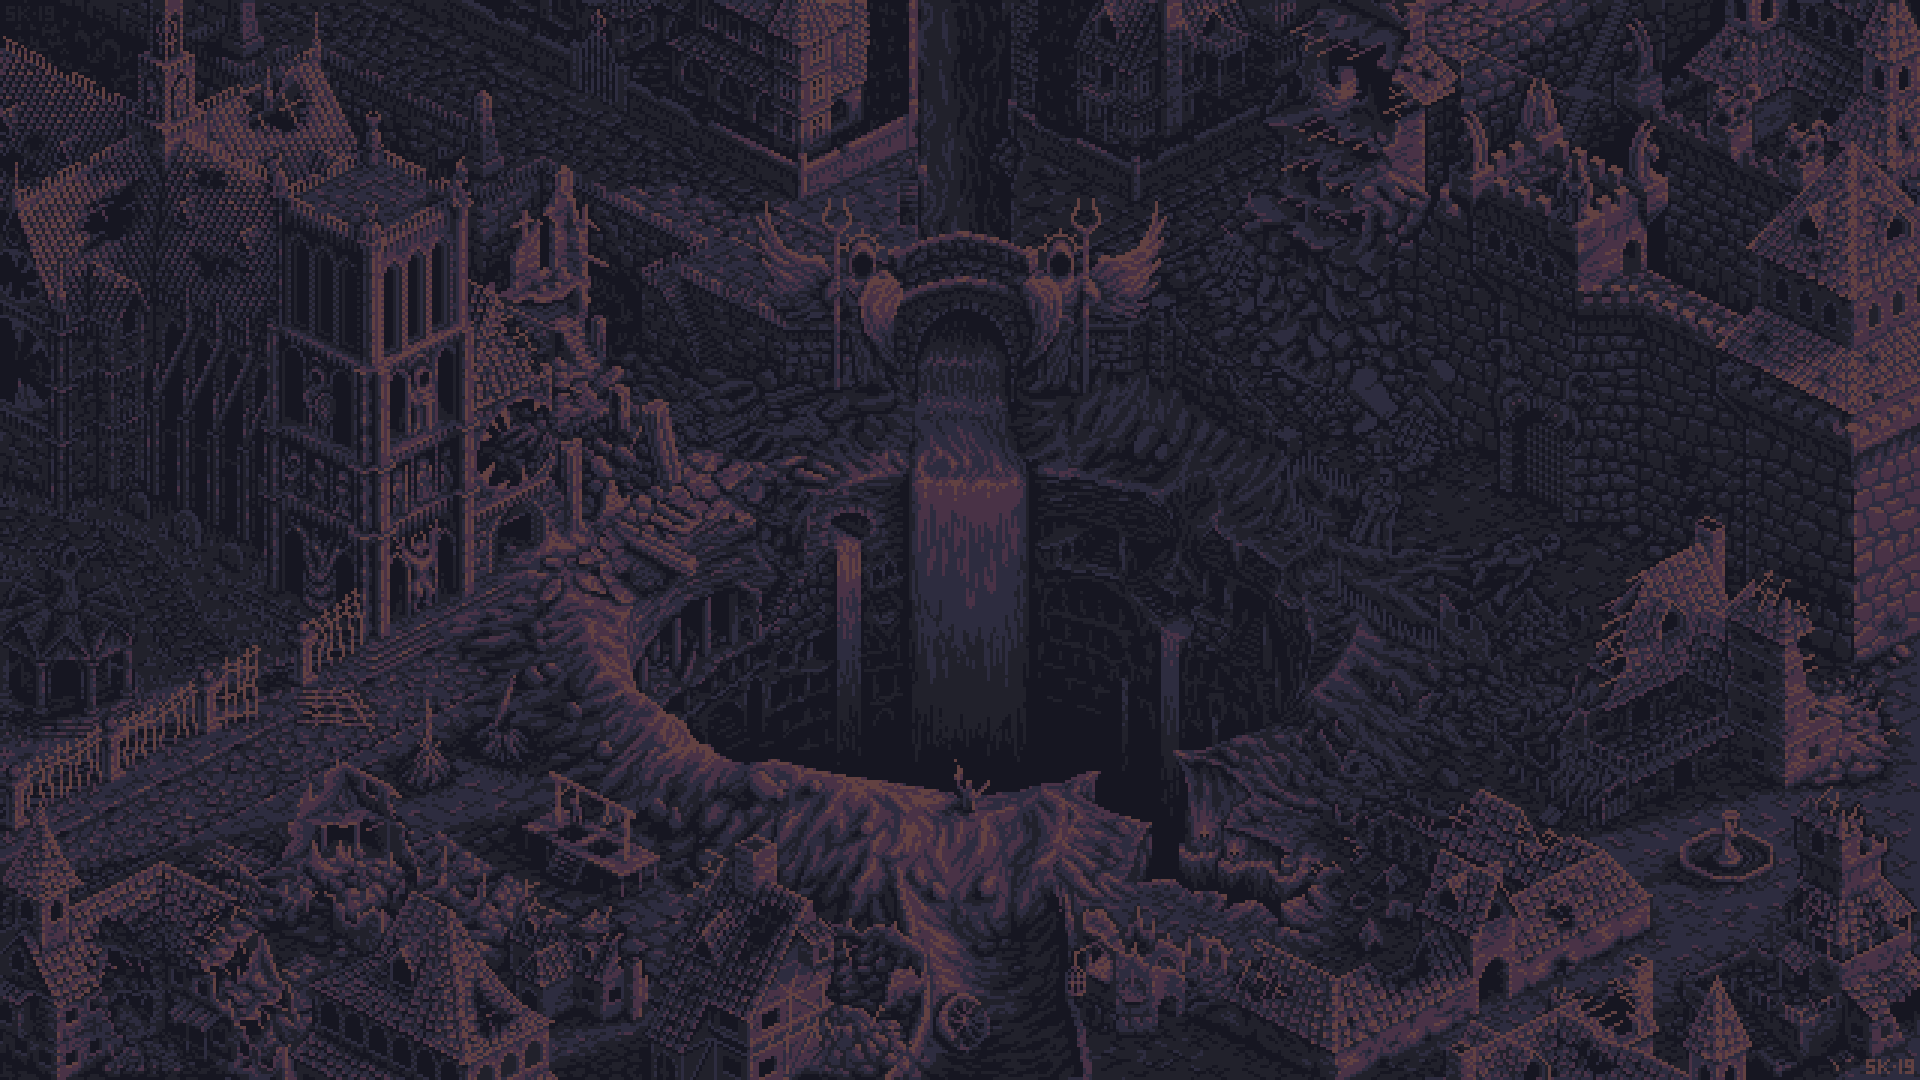 General 1920x1080 digital art pixel art pixelated pixels fantasy city waterfall house castle building cathedral